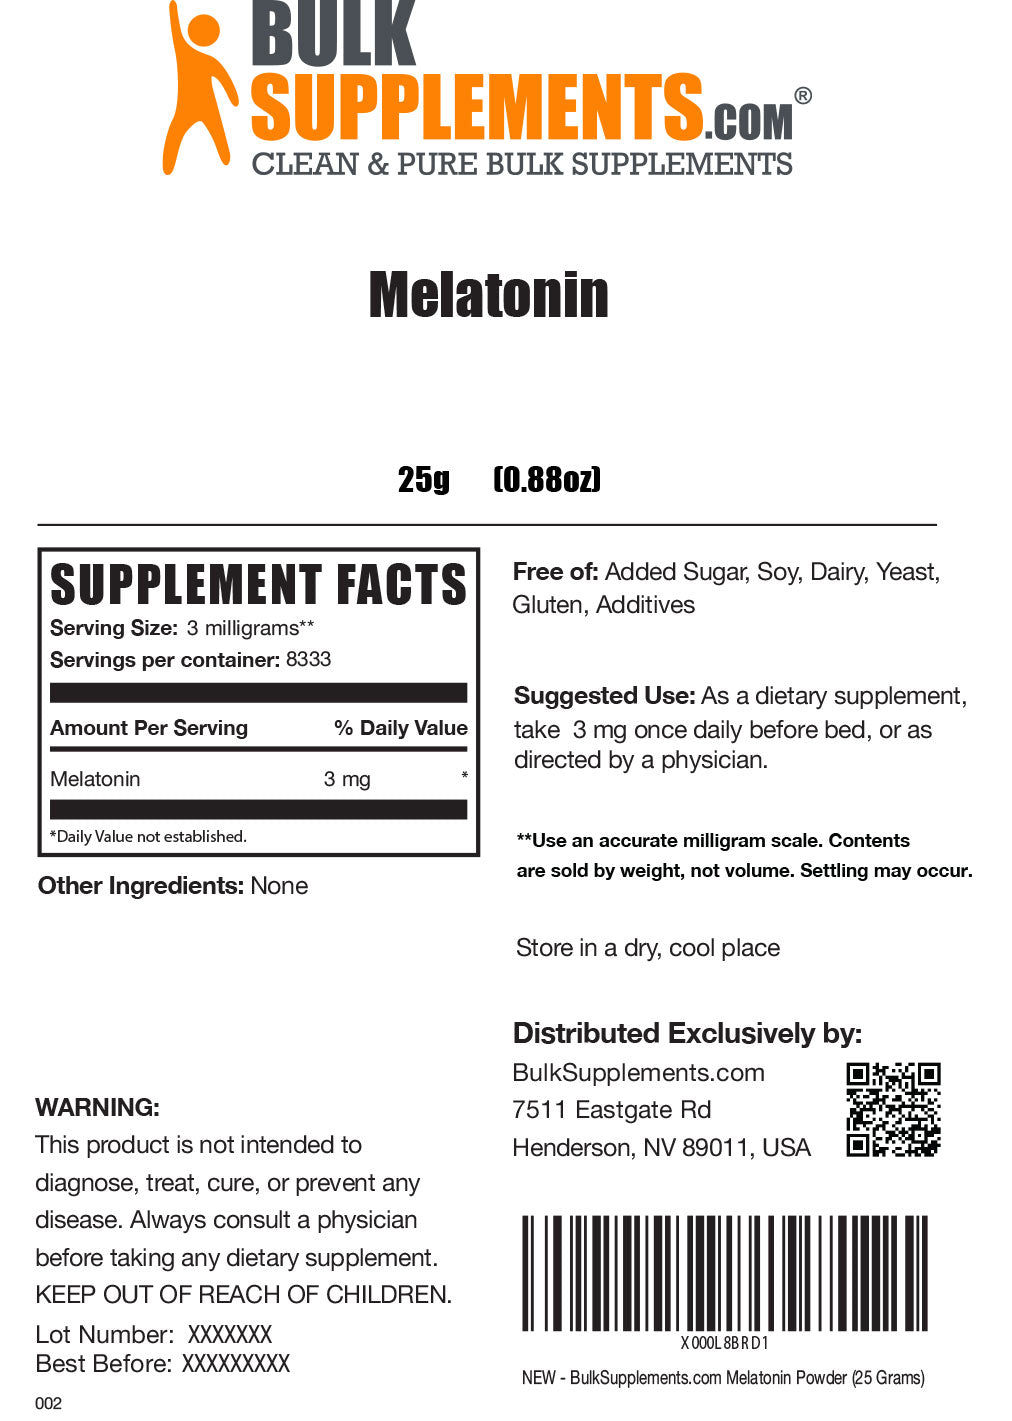 Melatonin powder label 25g